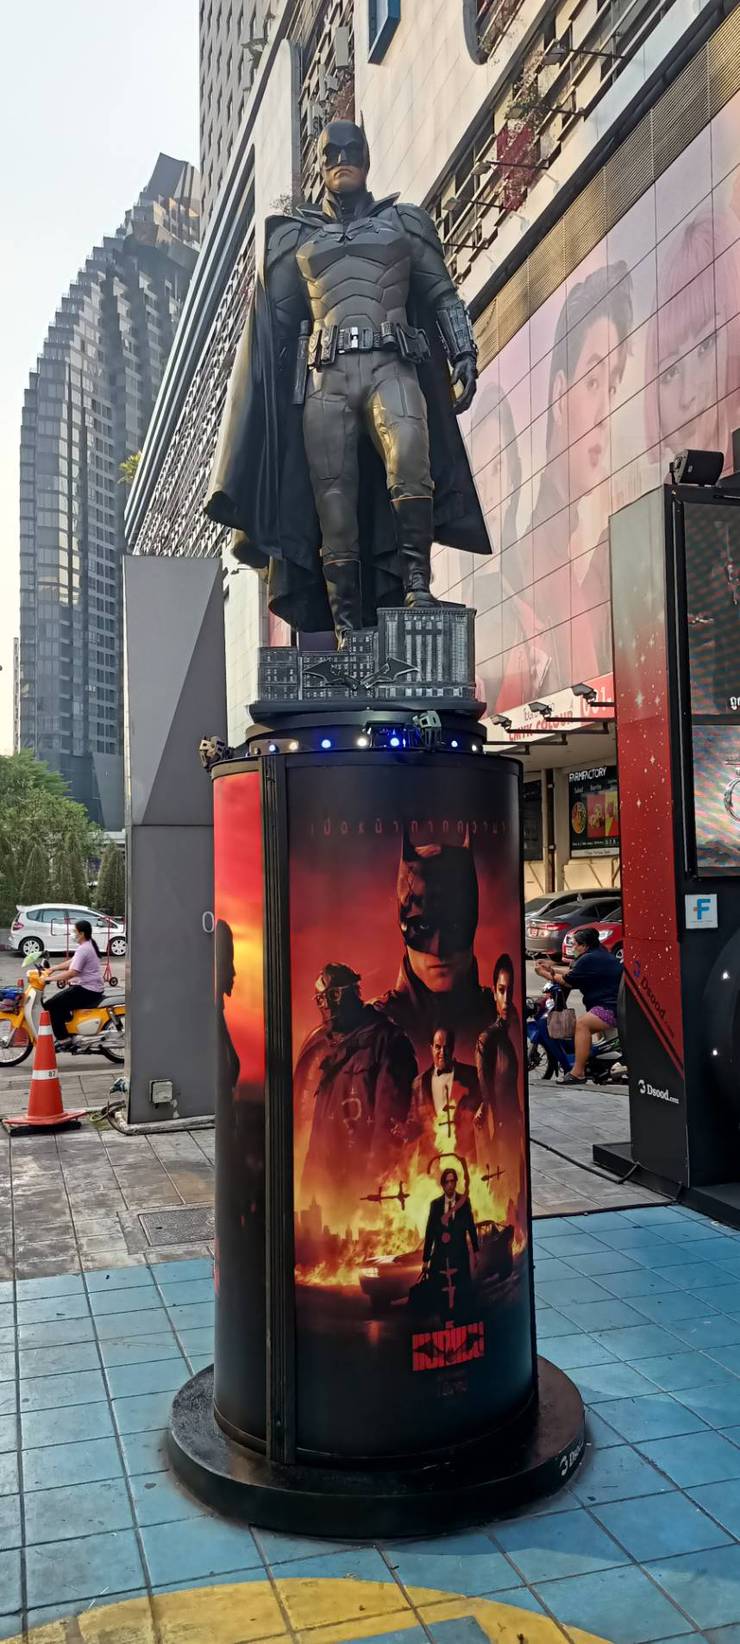 Robert-Pattinson-The-Batman-Statue-In-Thailand-1.jpg